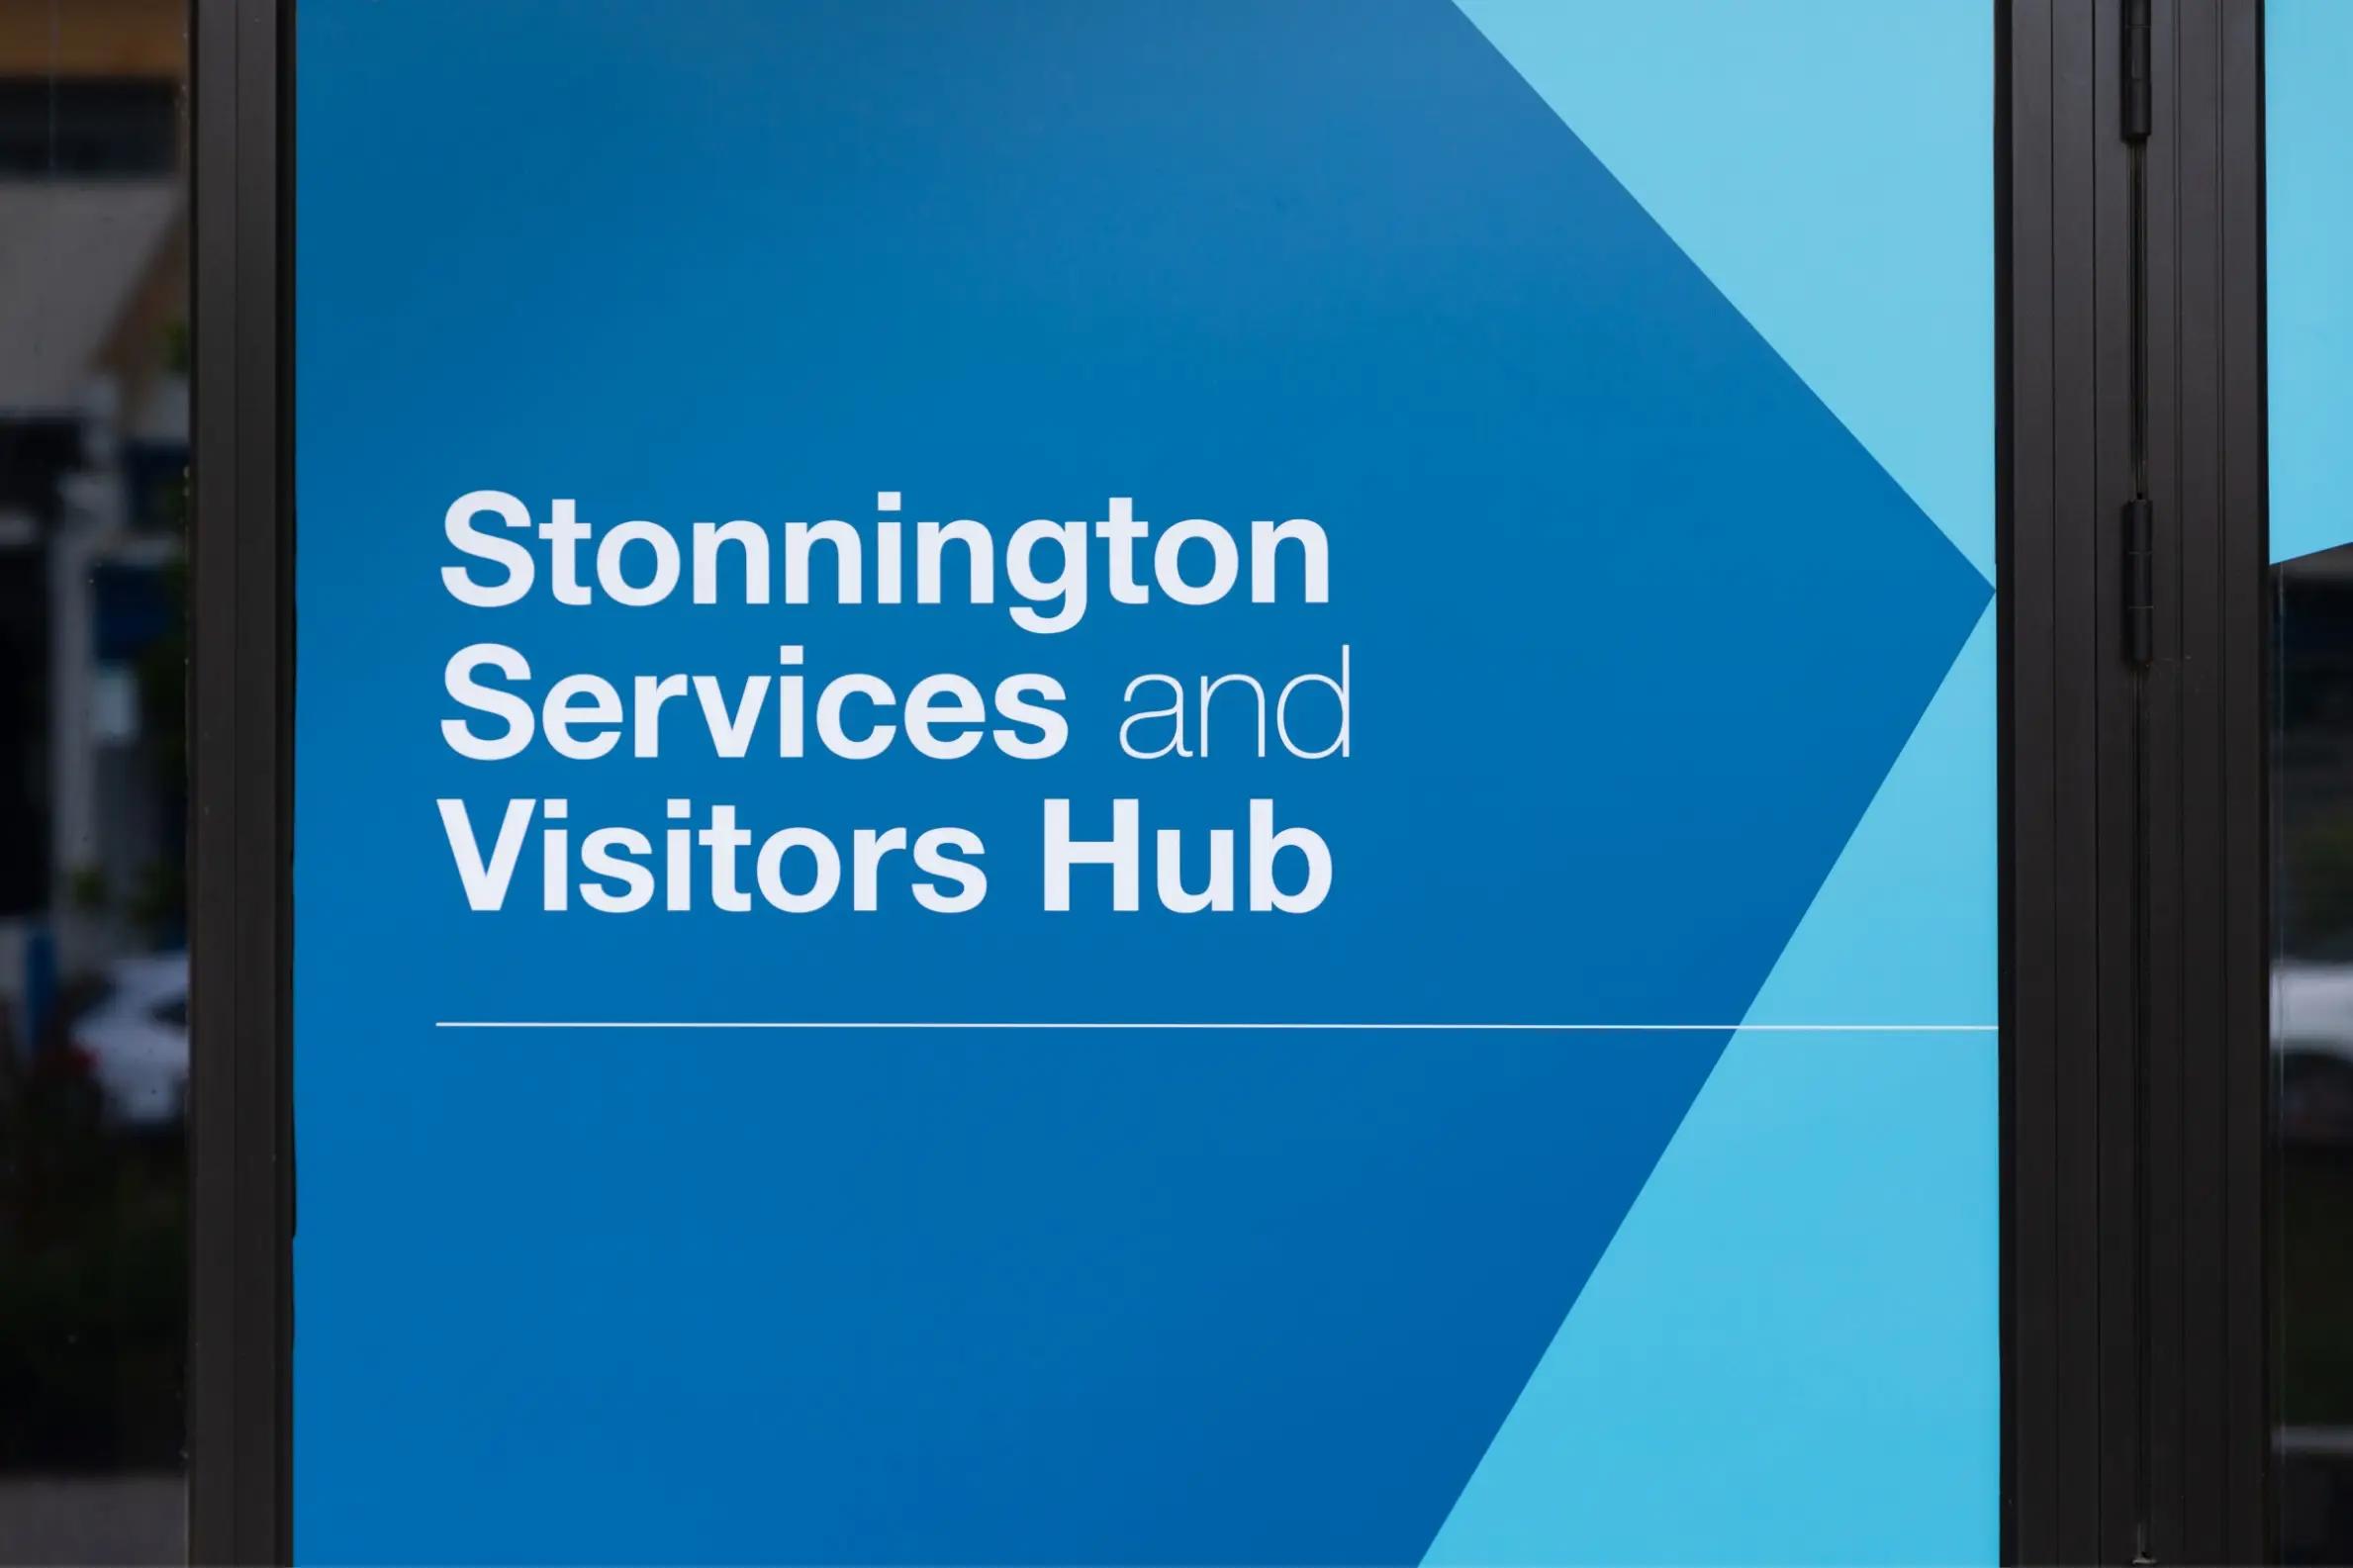 Stonnington Customer Service and Visitor Hub at Prahran Square